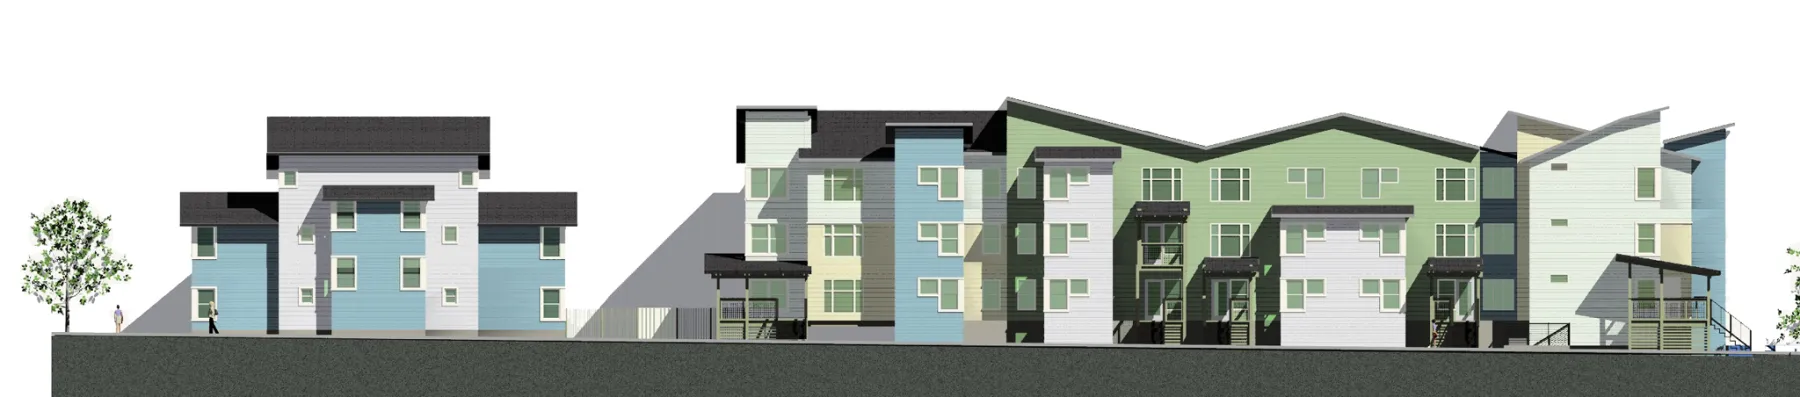 Elevation rendering of Linden Court in Oakland, California.